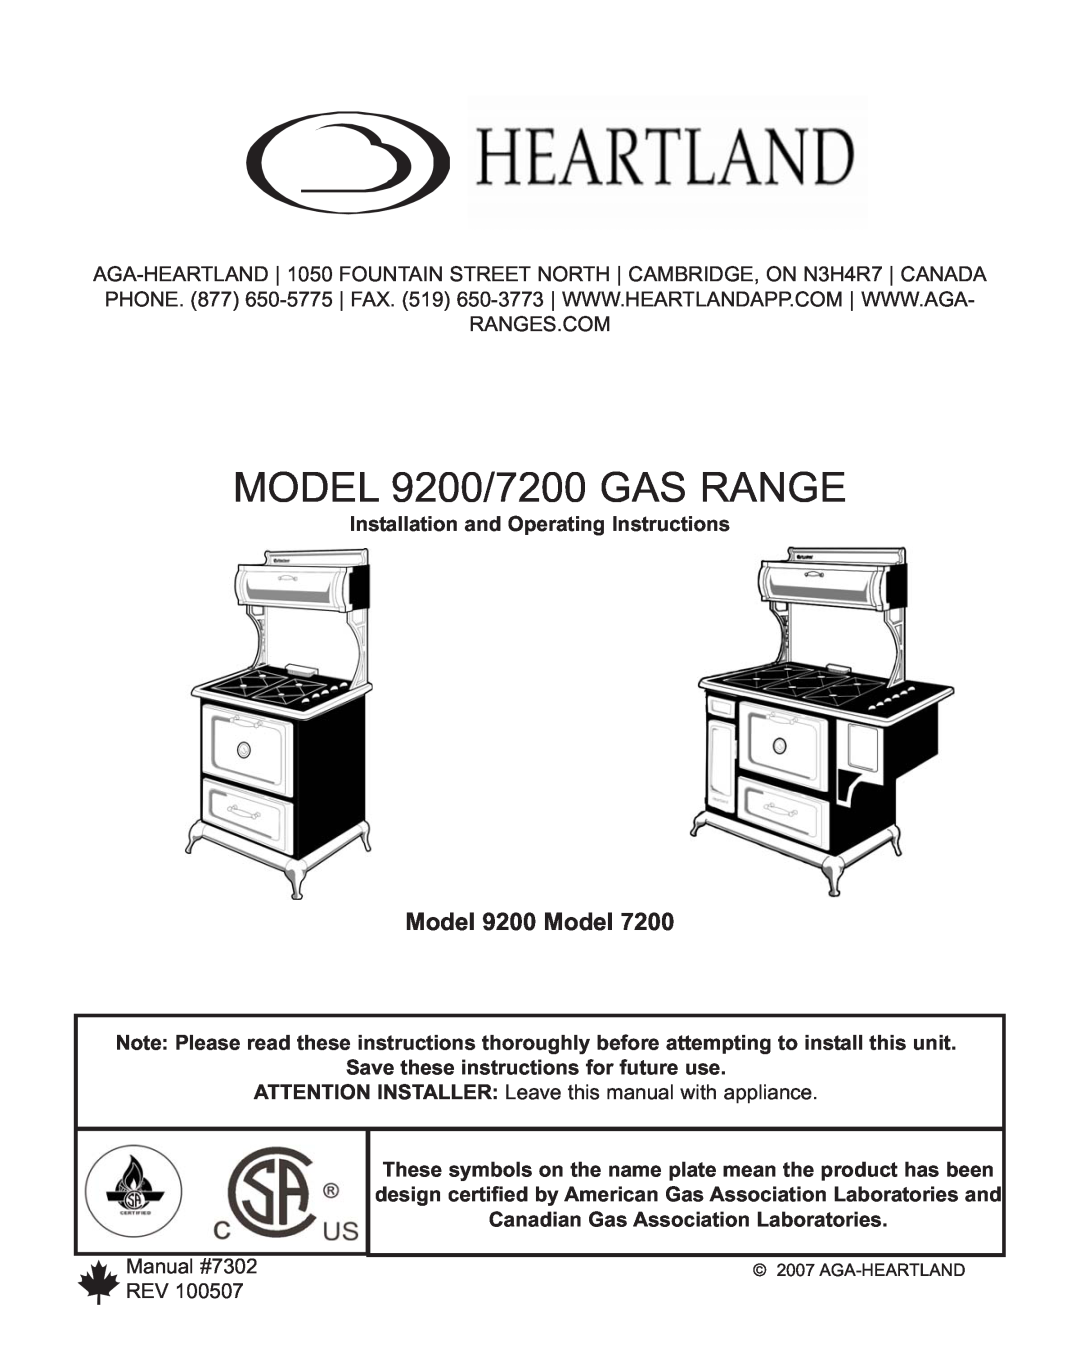 Heartland Bakeware manual MODEL 9200/7200 GAS RANGE, Model 9200 Model 